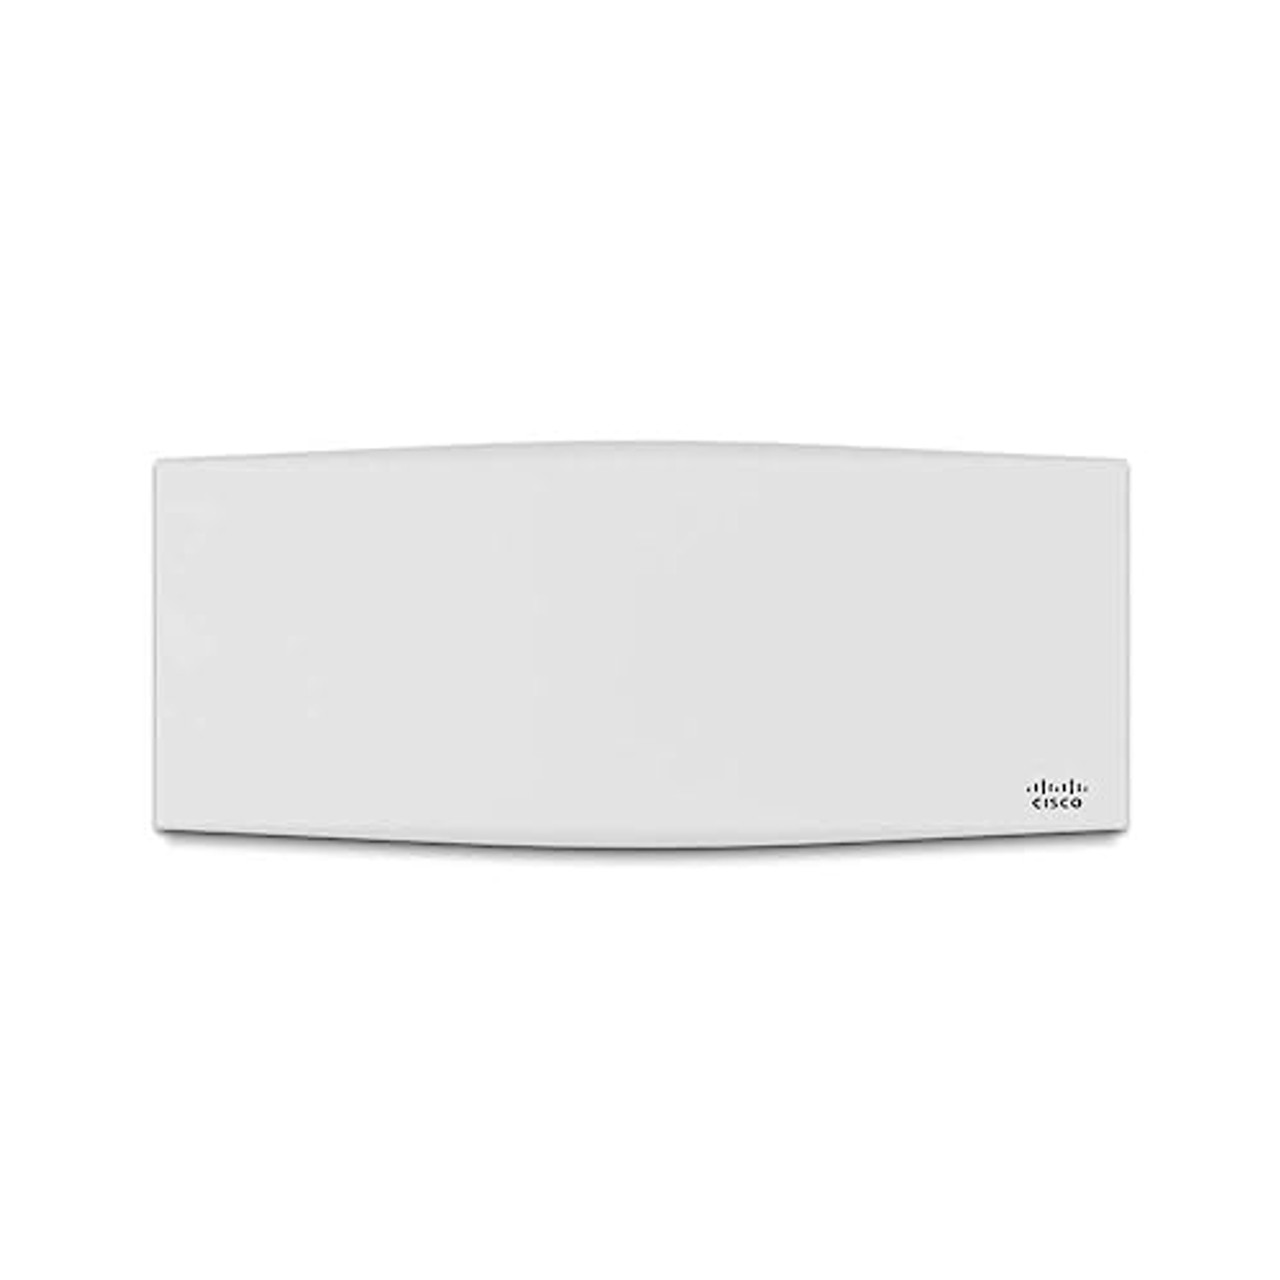 MR45-HW | Cisco | Meraki Wireless Access Point